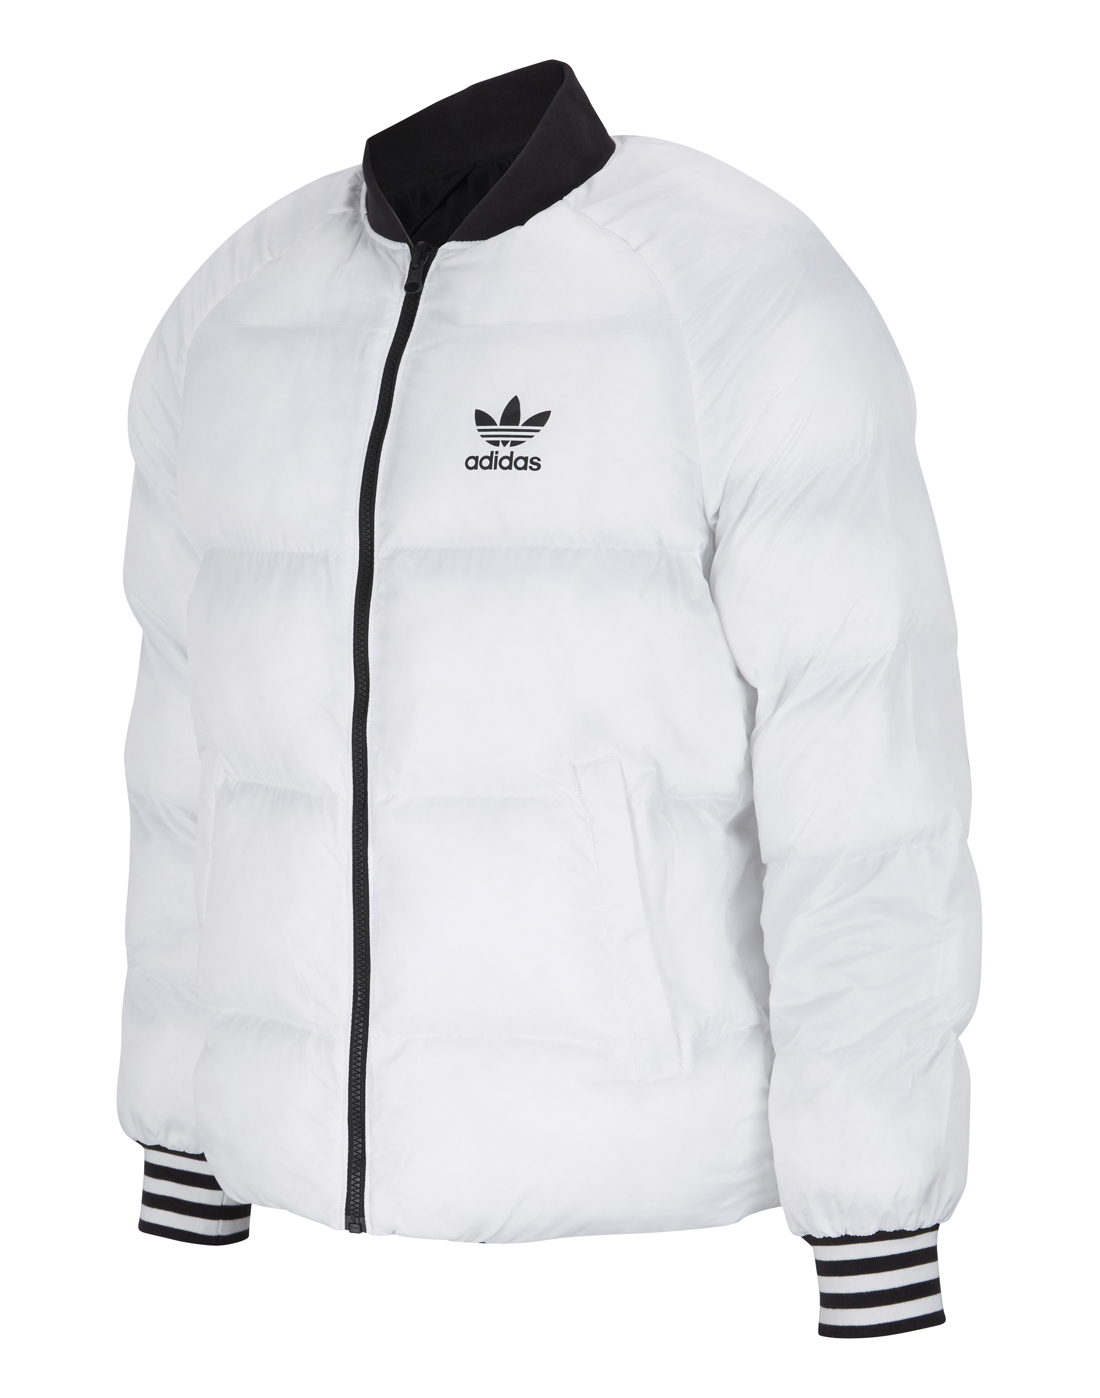 adidas superstar jacket white